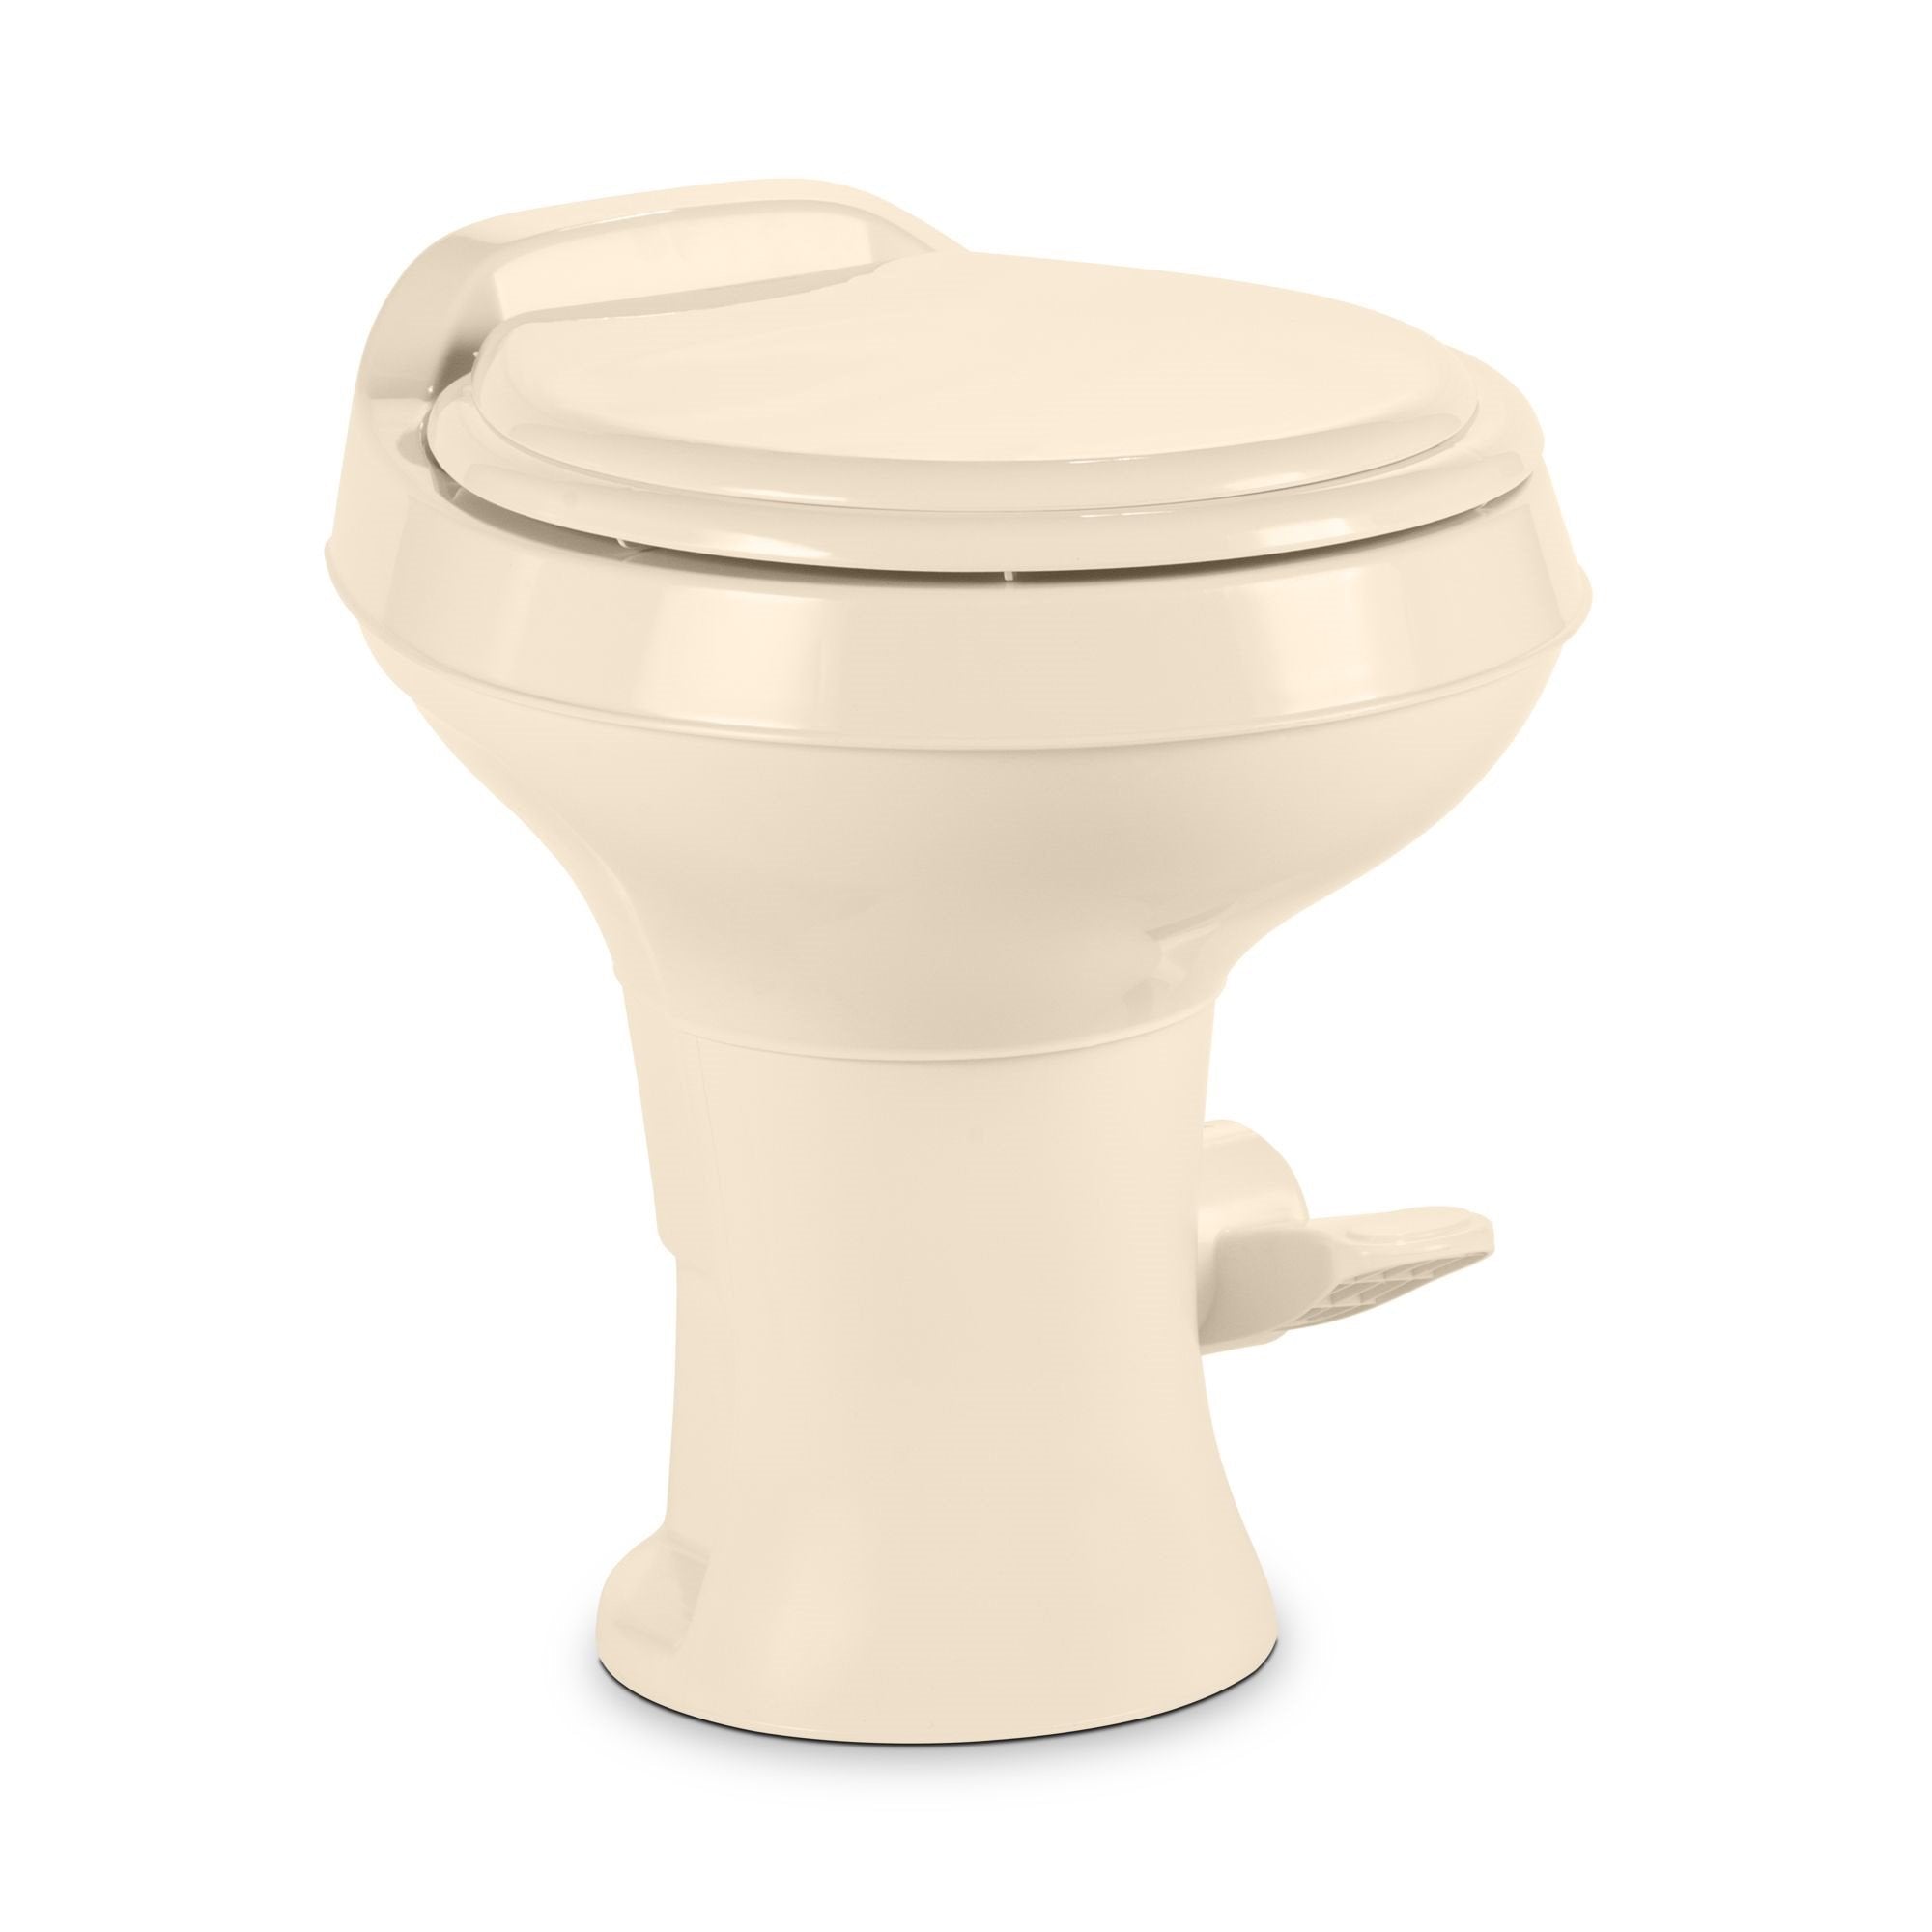 Dometic 302300073 300 Series Standard Height Toilet, Bone